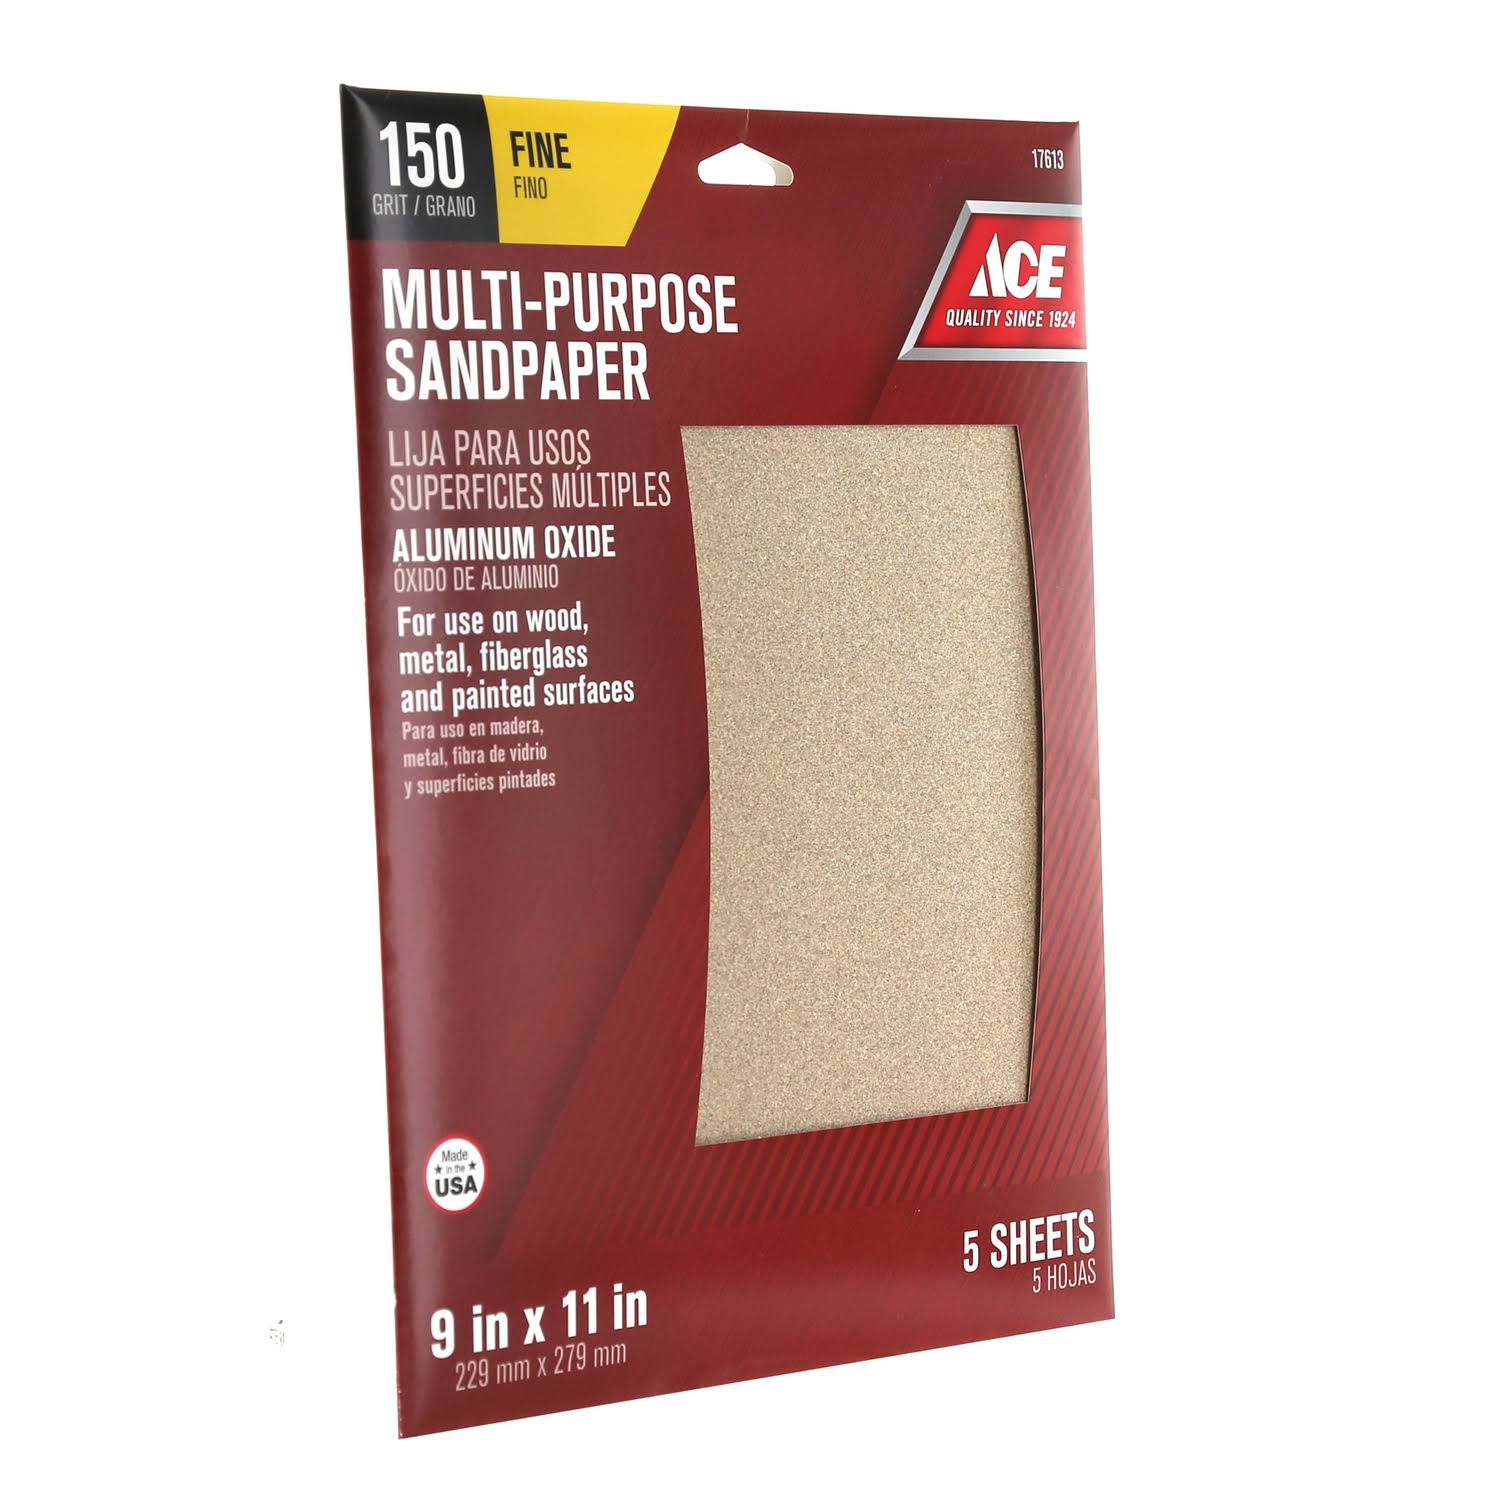 Ace Multi0Surface Sandpaper - Fine, 150 Grit, 5 ct